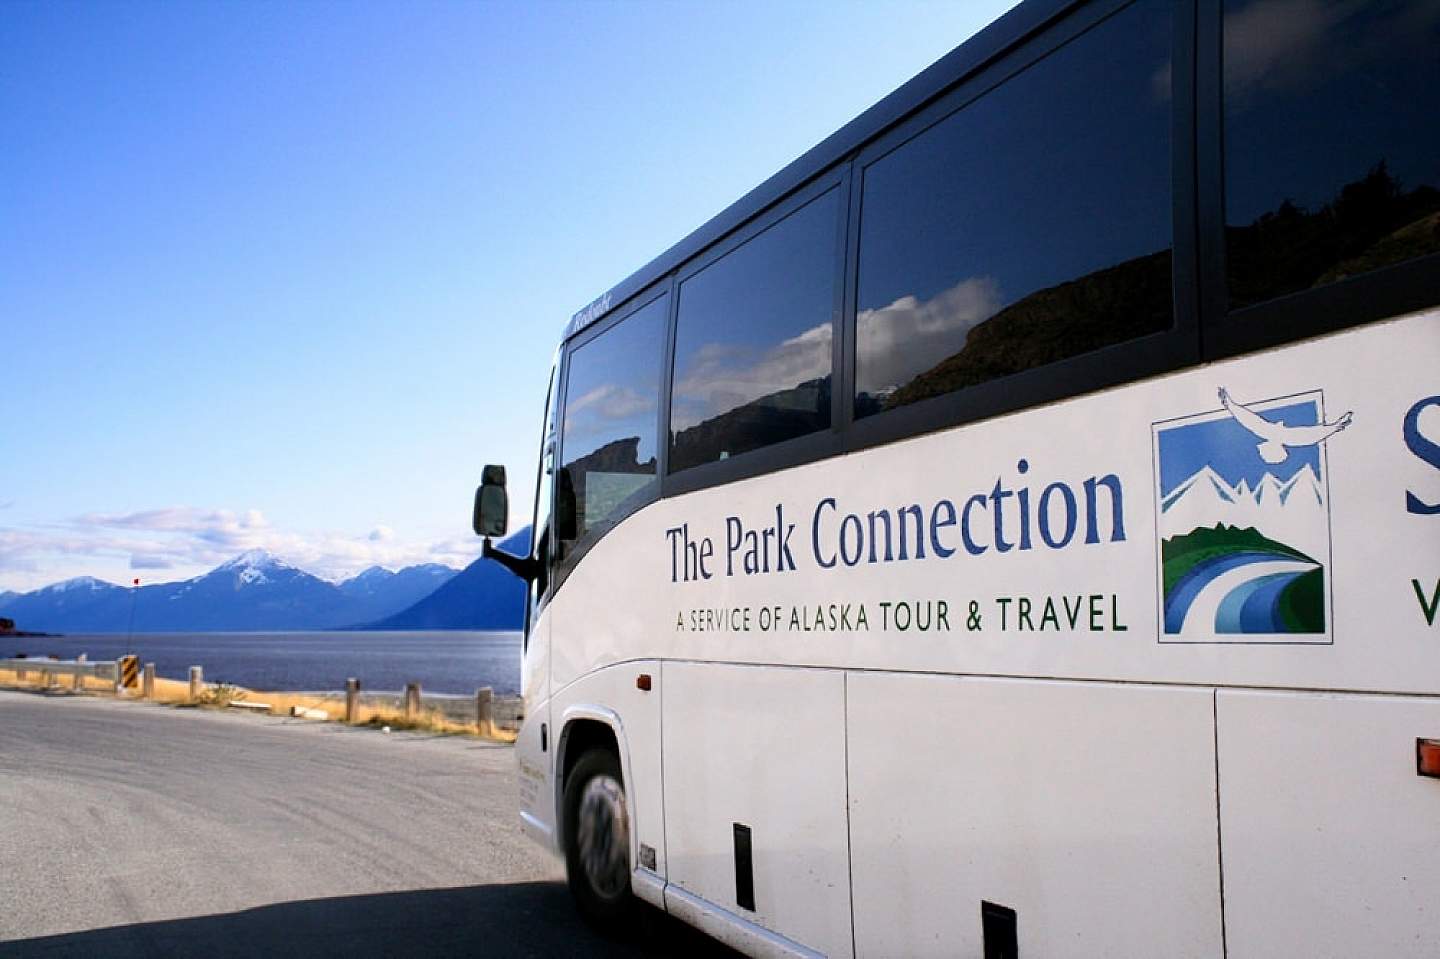 The Park Connection follows the scenic Turnagain Arm